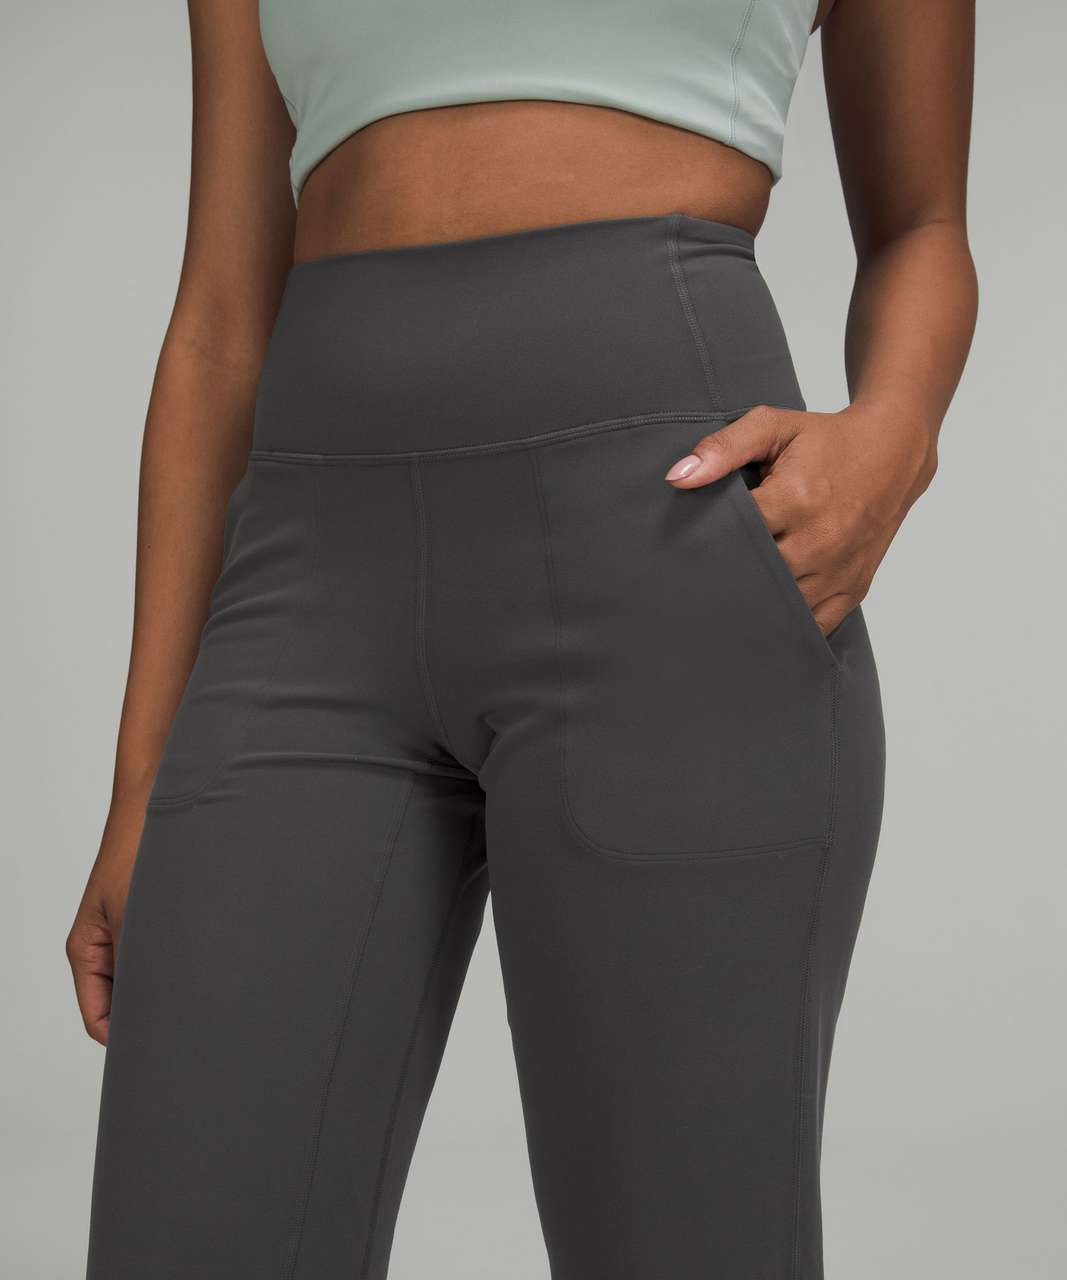 Lululemon Align HR Crop 23” Pant Women's Size 20 Gray